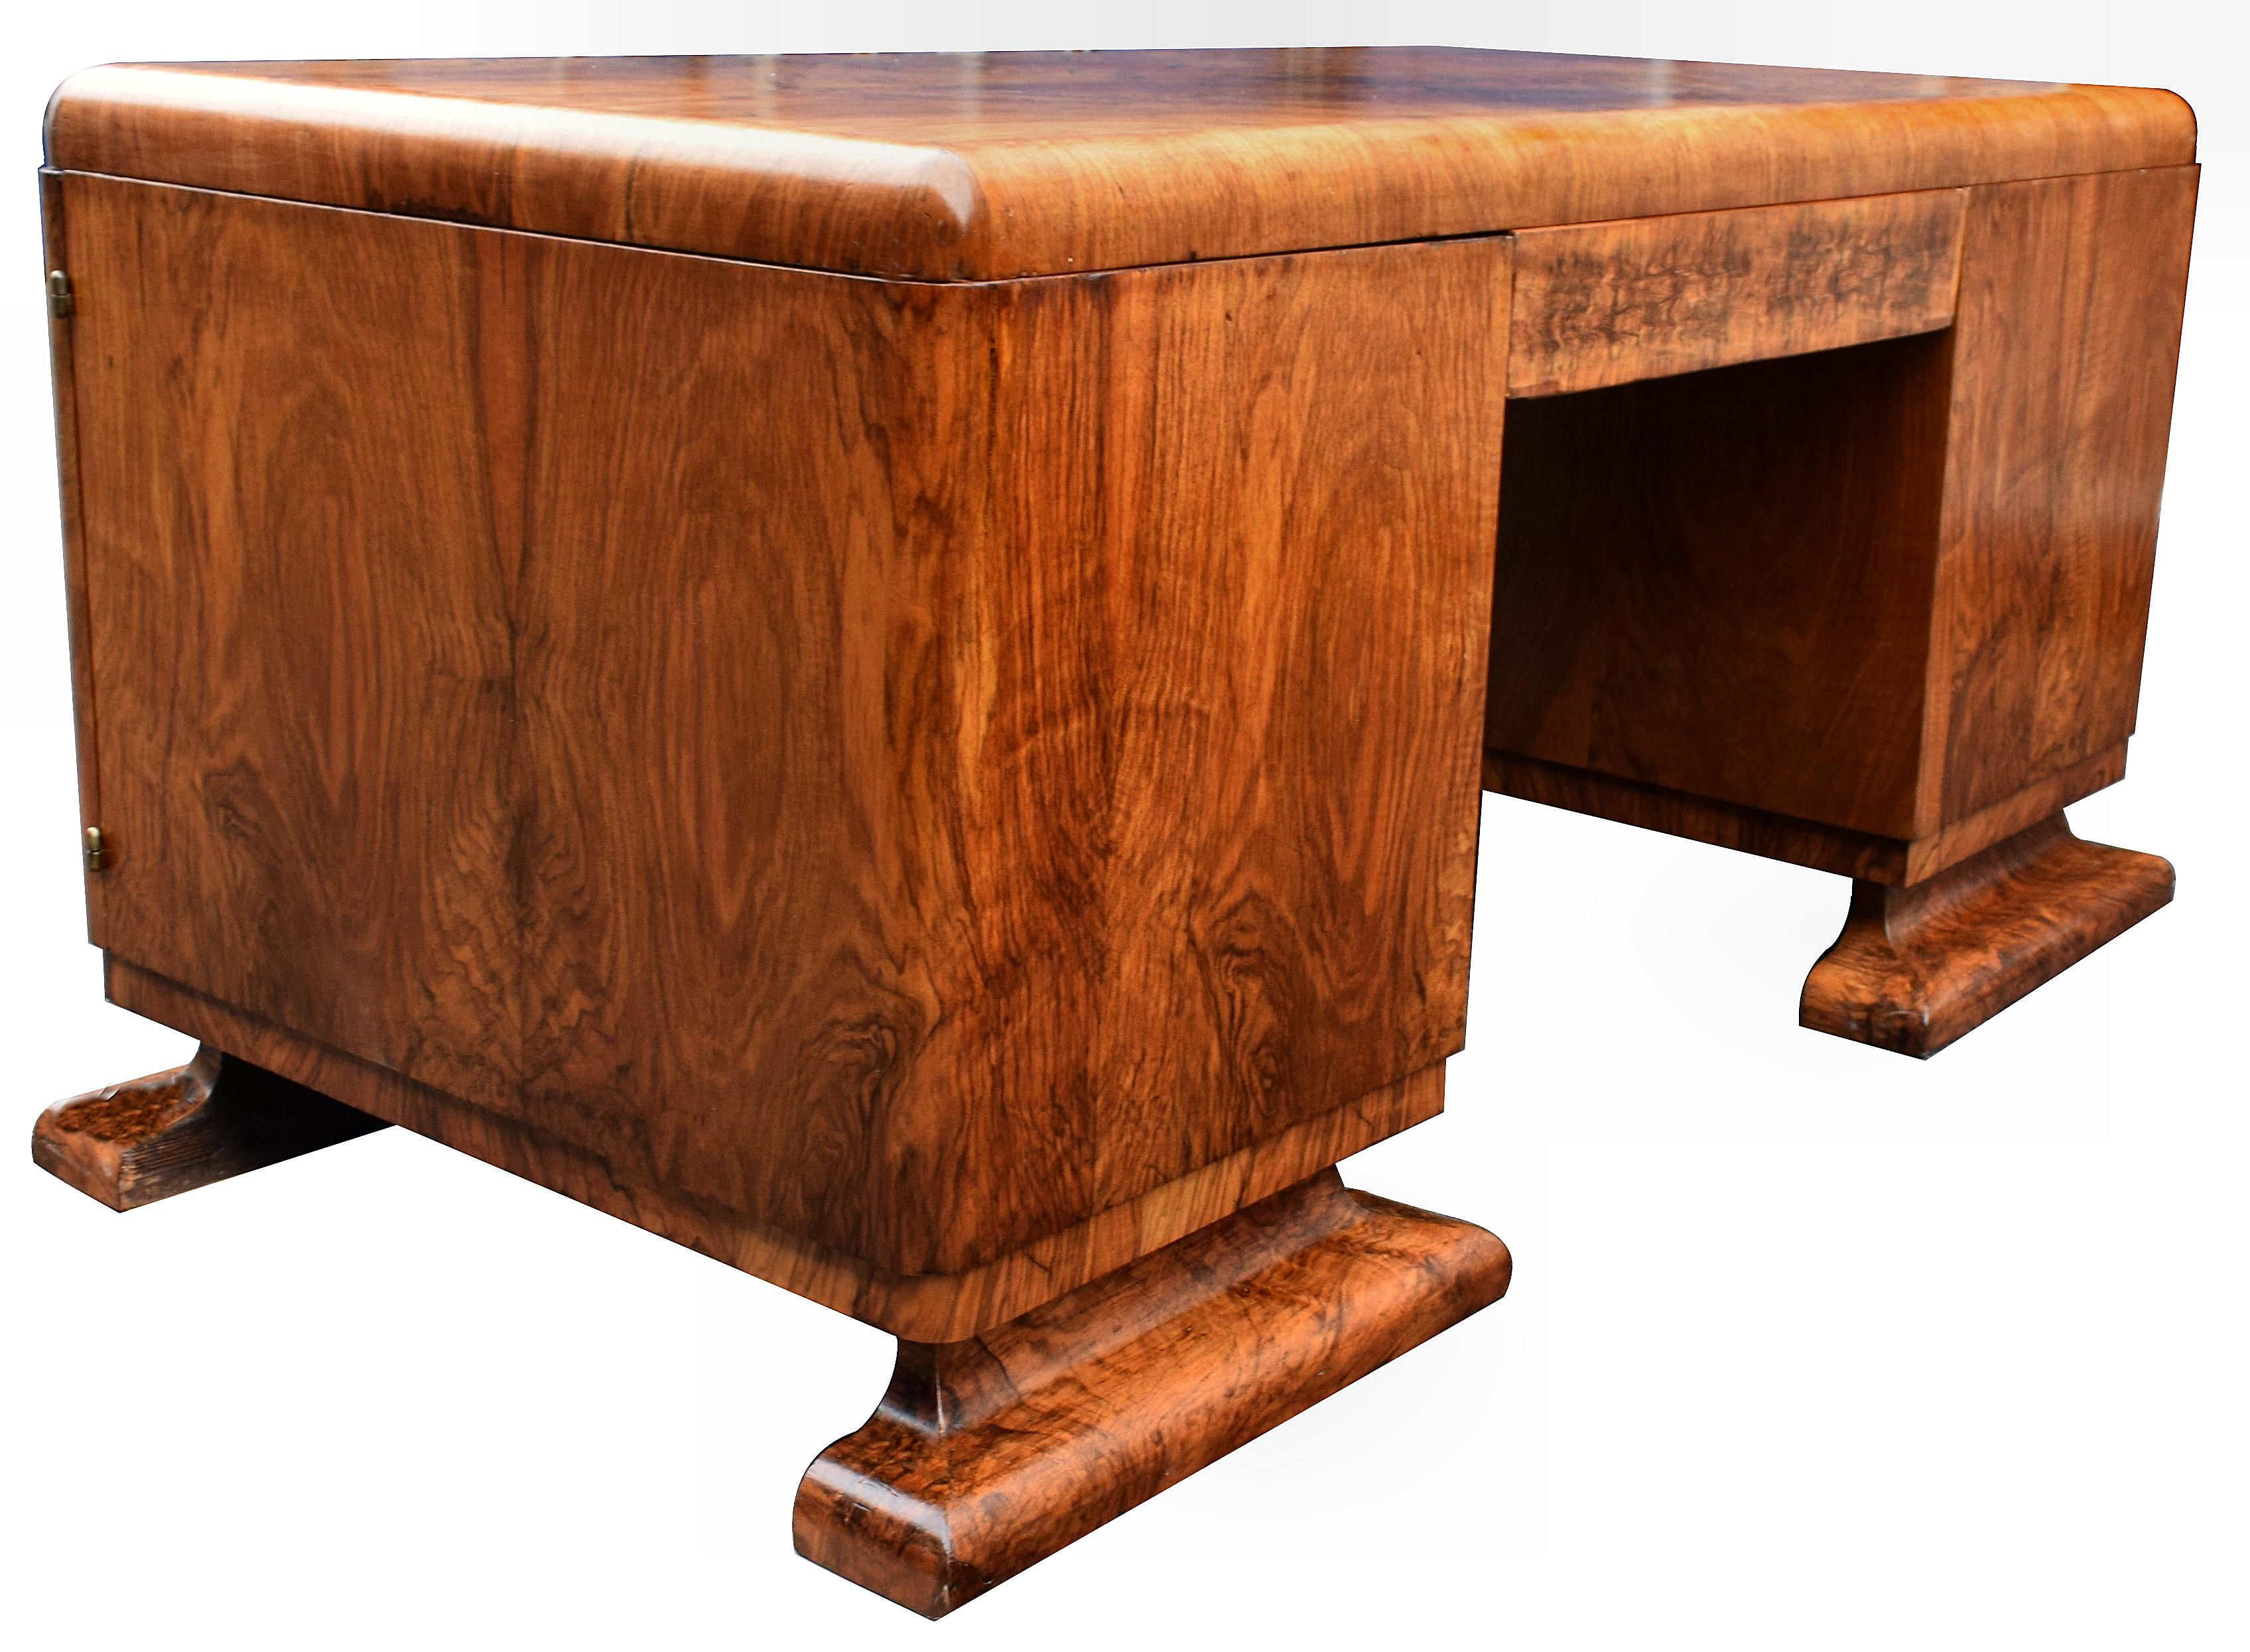 Substantial Art Deco Walnut Partners Desk, circa 1935 (Art déco)